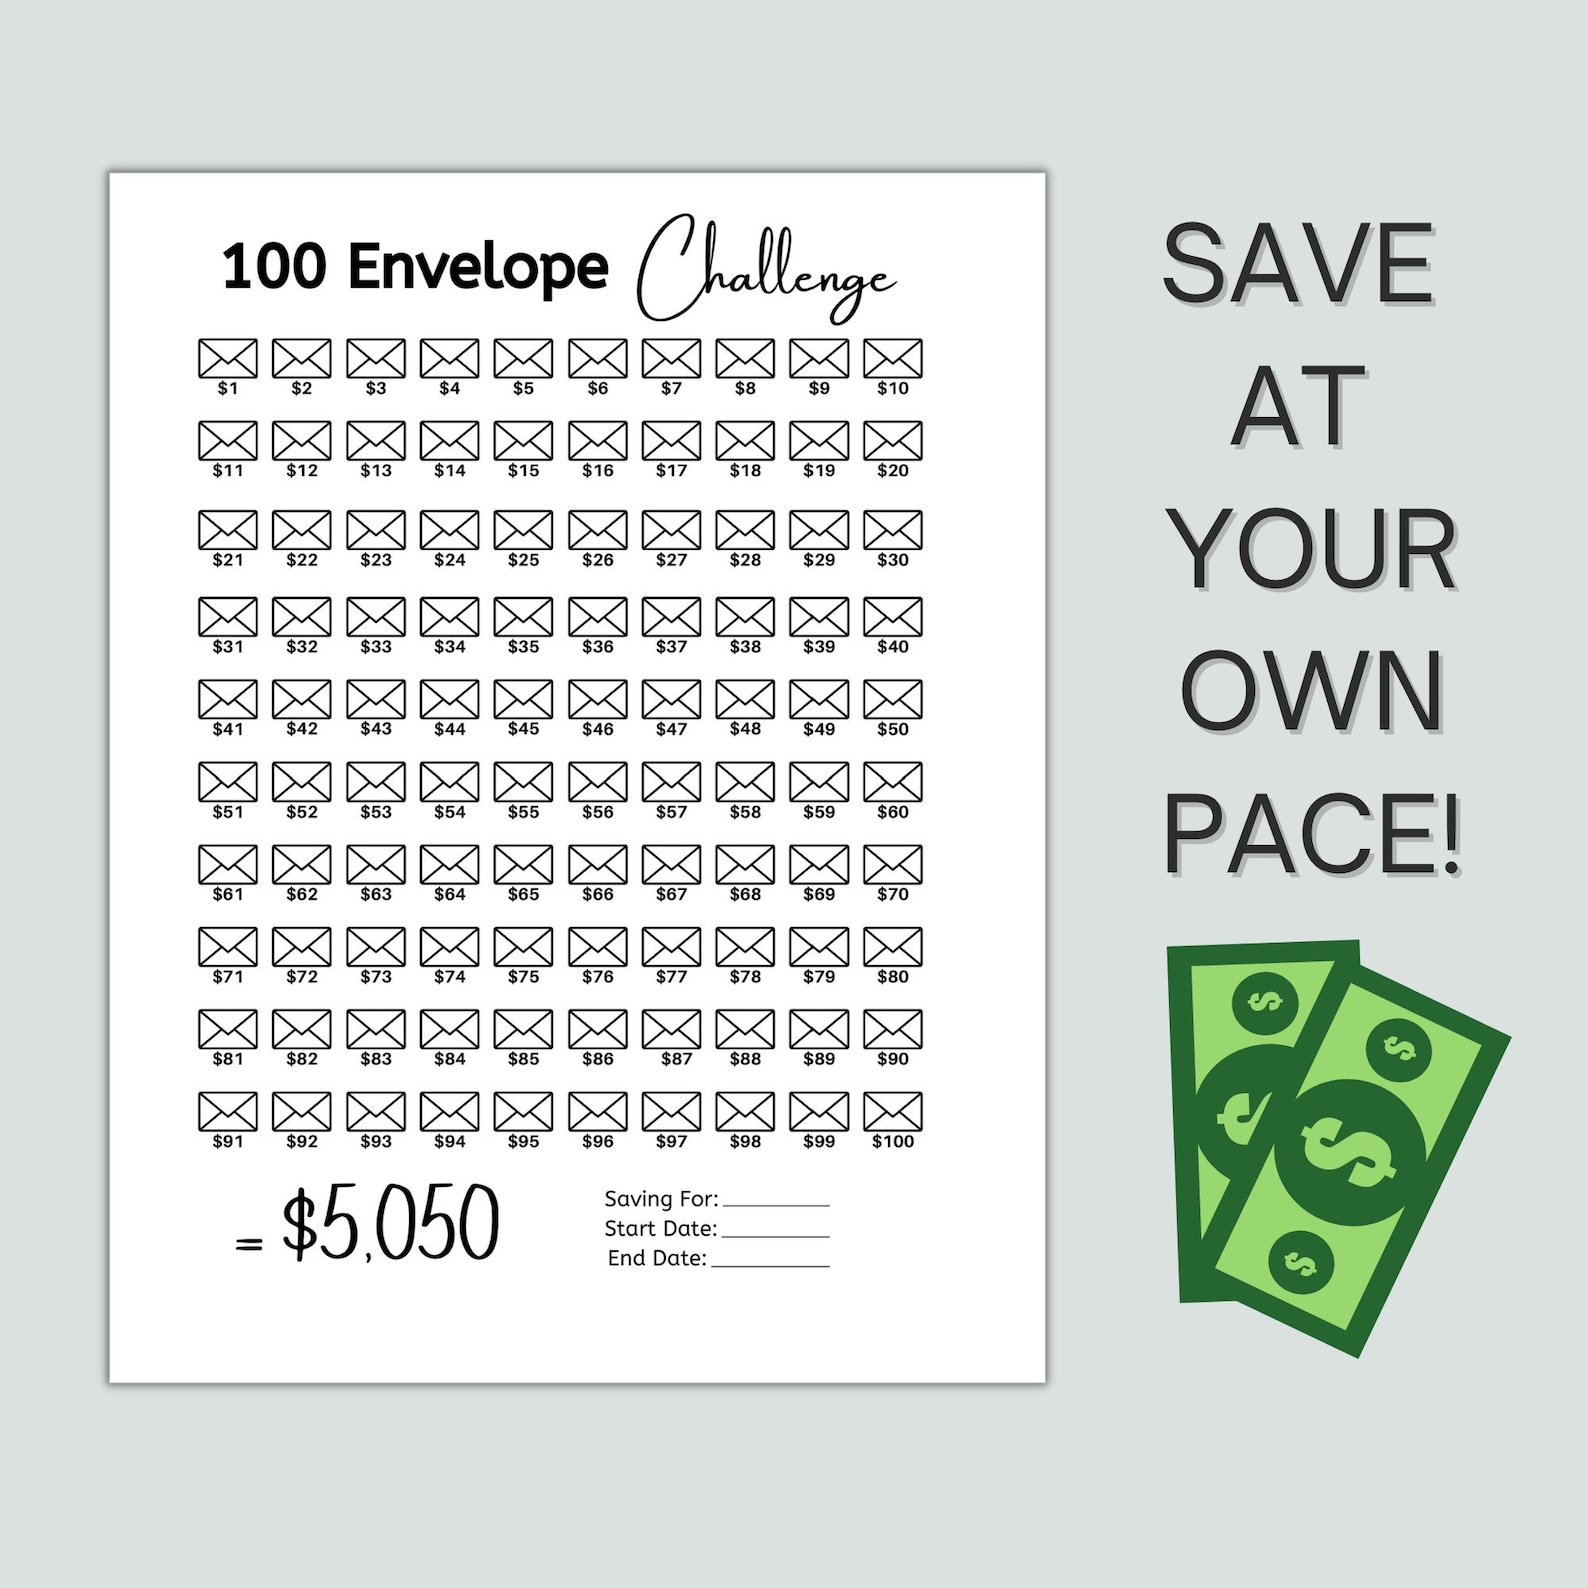 Free Printable 100 Envelope Challenge Template